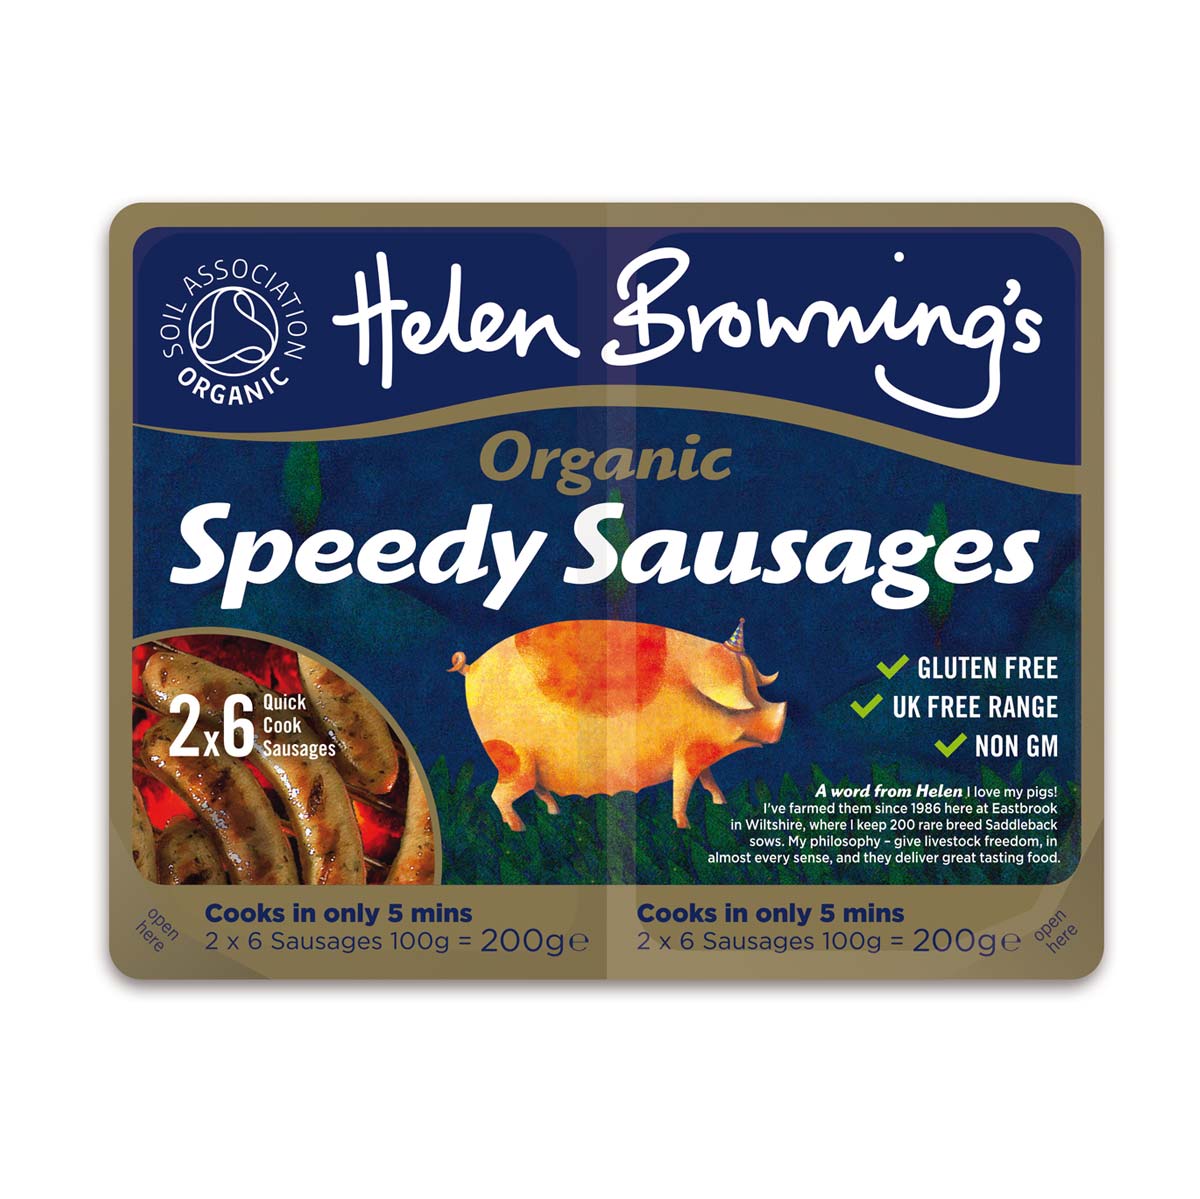 Helen Browning’s Organic Speedy Sausages pack design